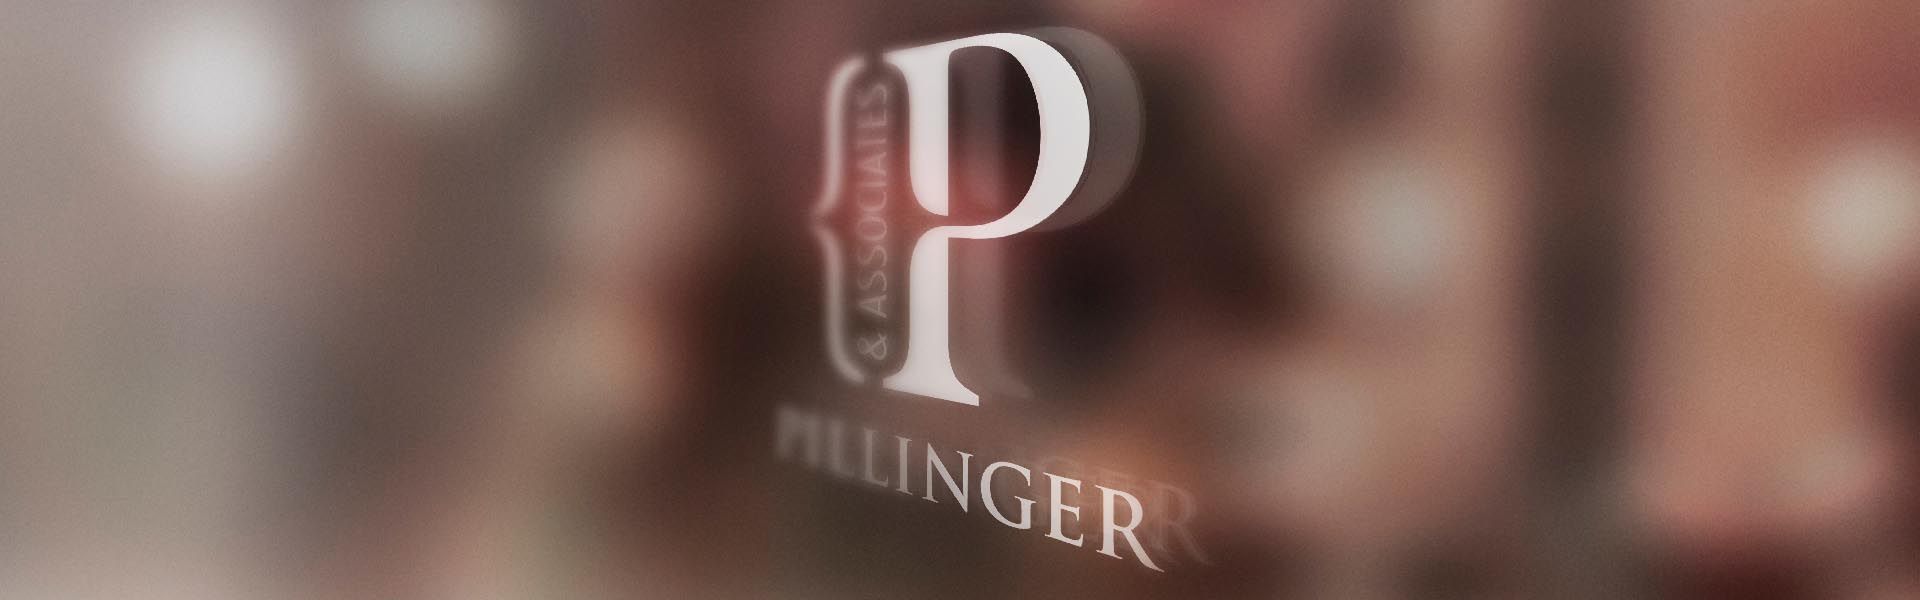 a blurred image of a logo for pillinger & associates